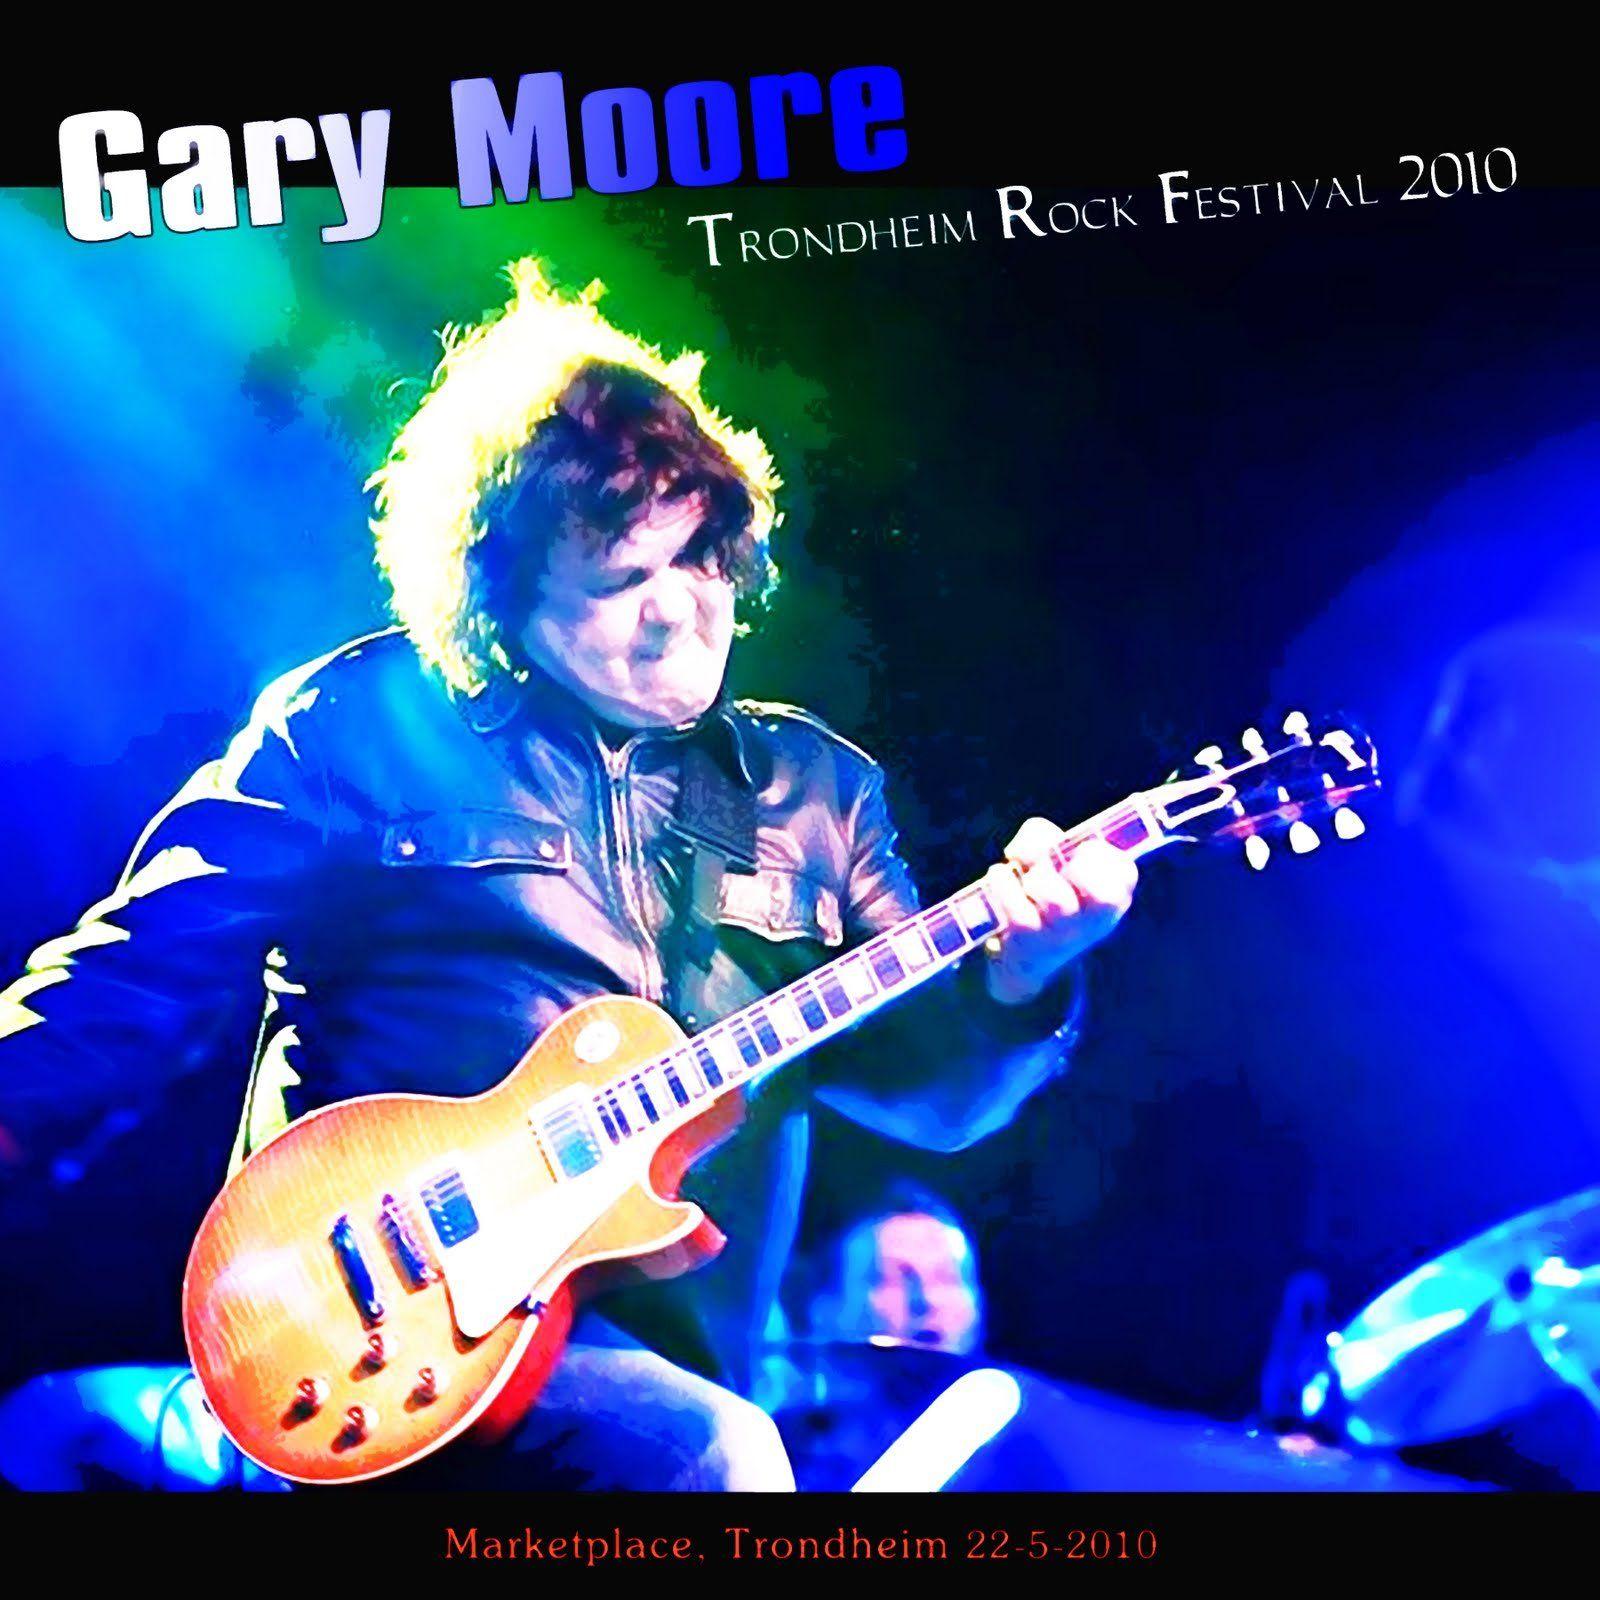 GARY MOORE blues rock heavy metal guitar jazz fusion progressive